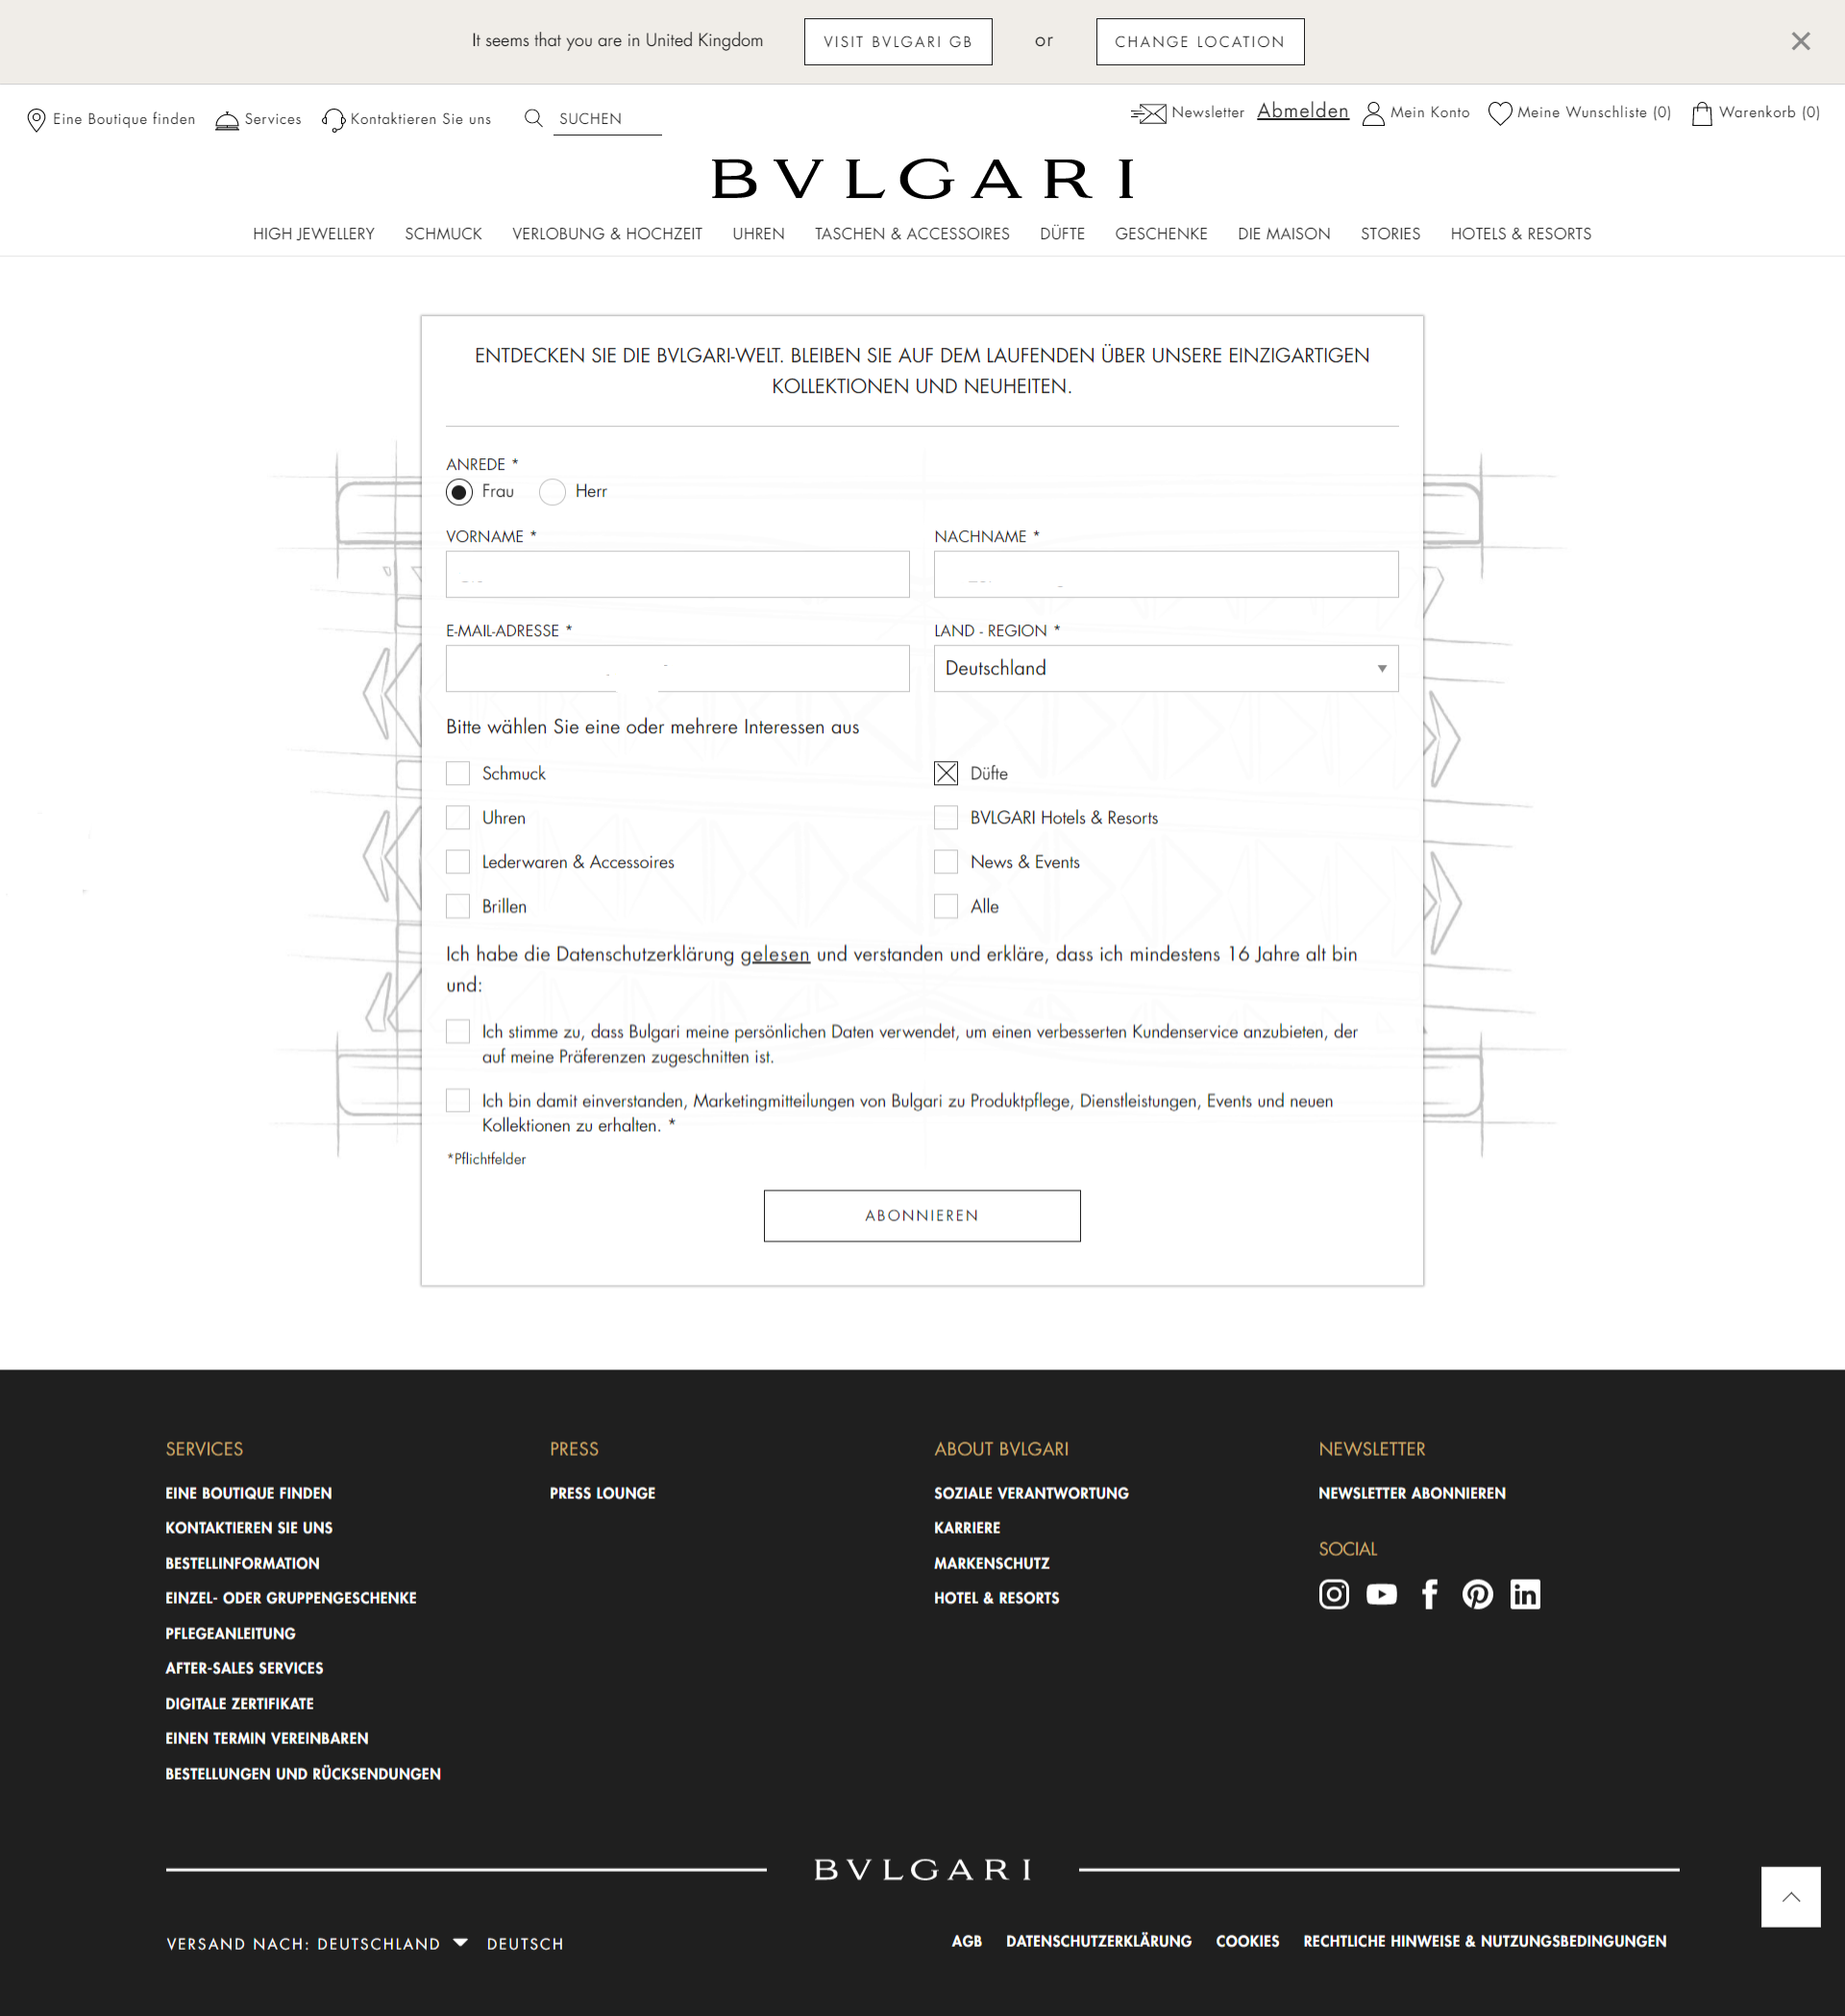 4_6_21 Bulgari - newsletter - erased captcha.png